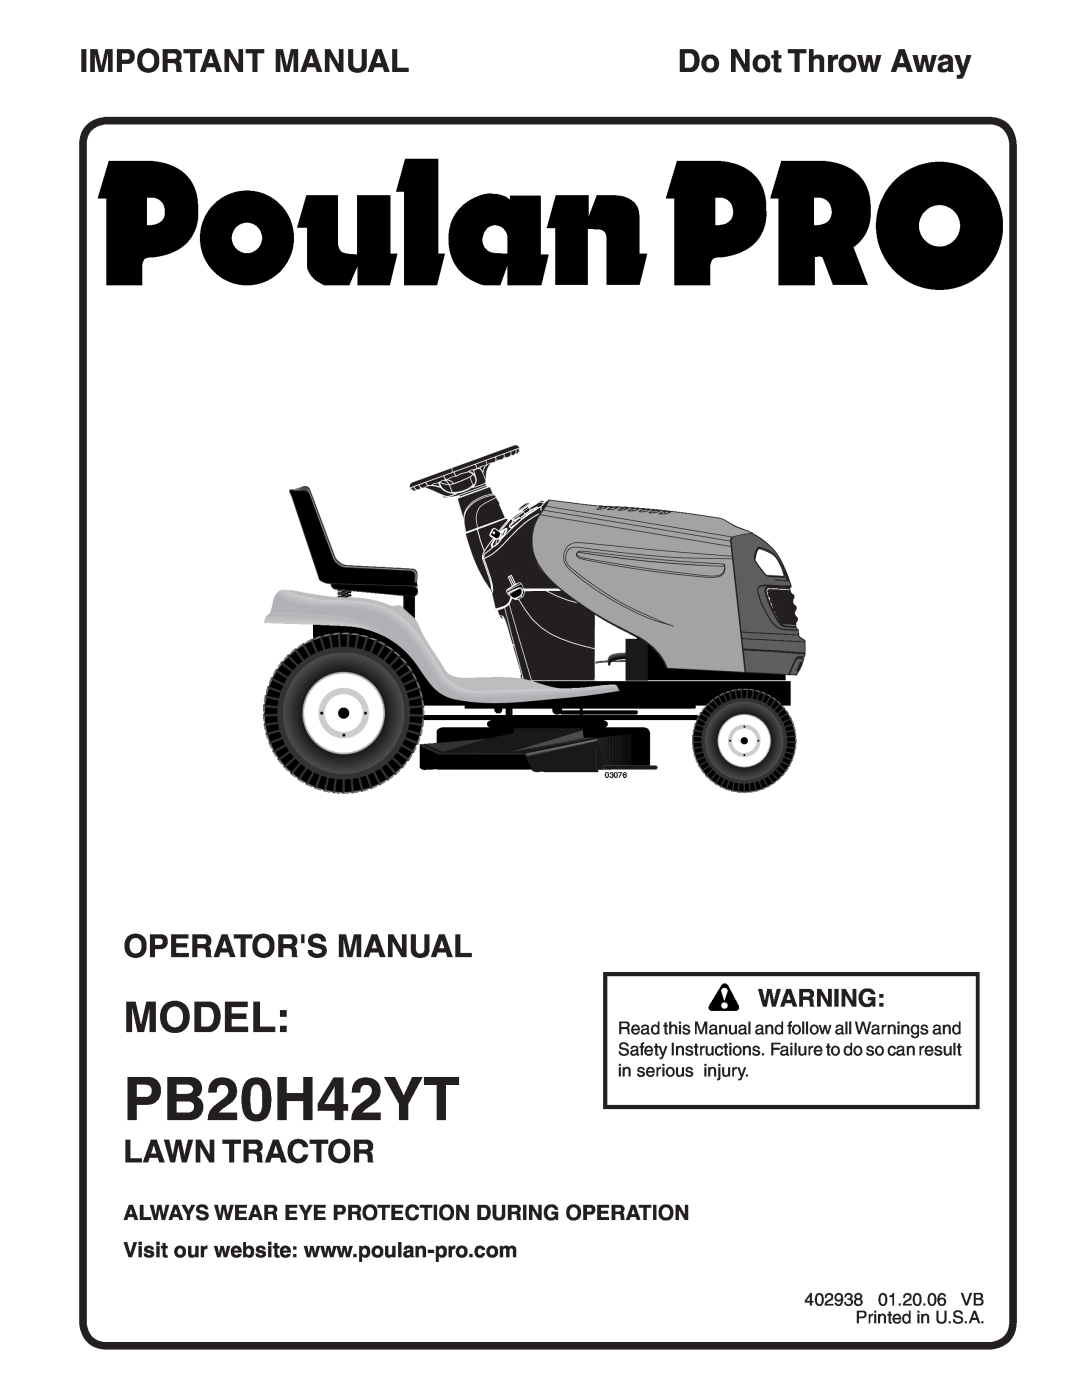 Poulan PB20H42YT manual Model, Important Manual, Do Not Throw Away, Repair Parts Manual, Lawn Tractor, 532,  